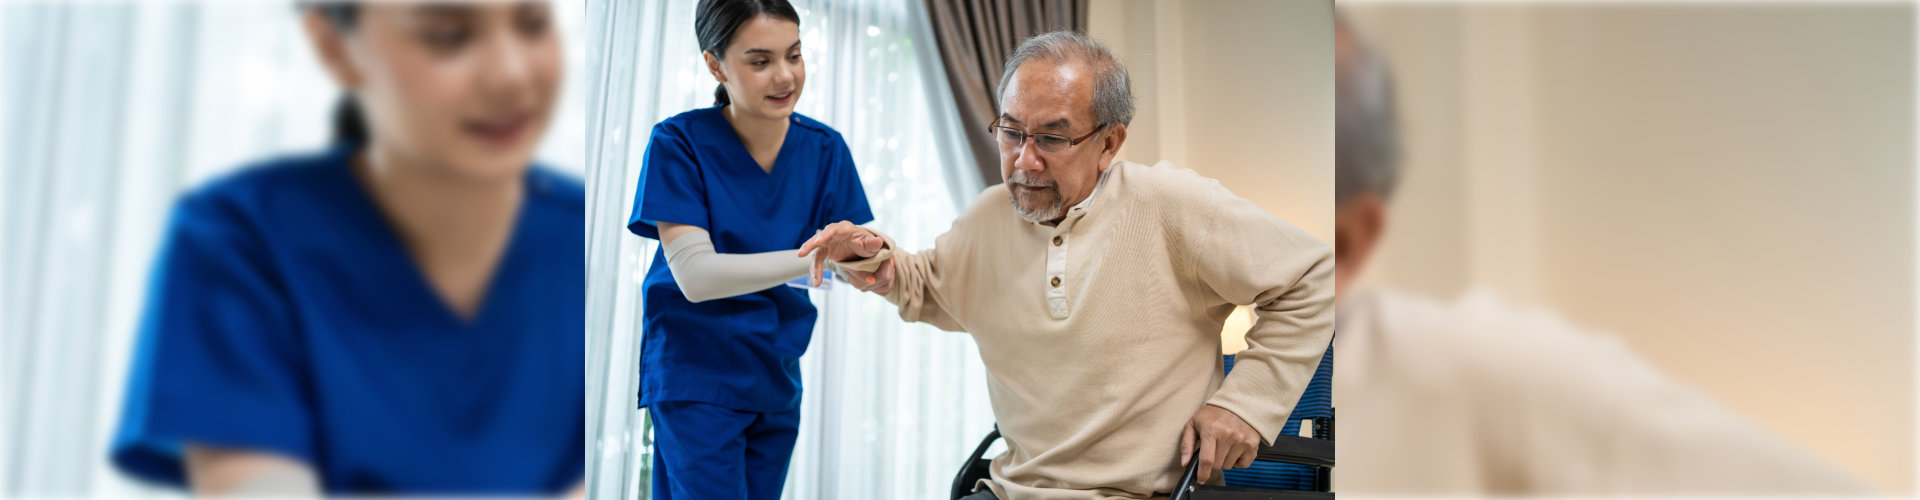 caregiver assisting senior standing